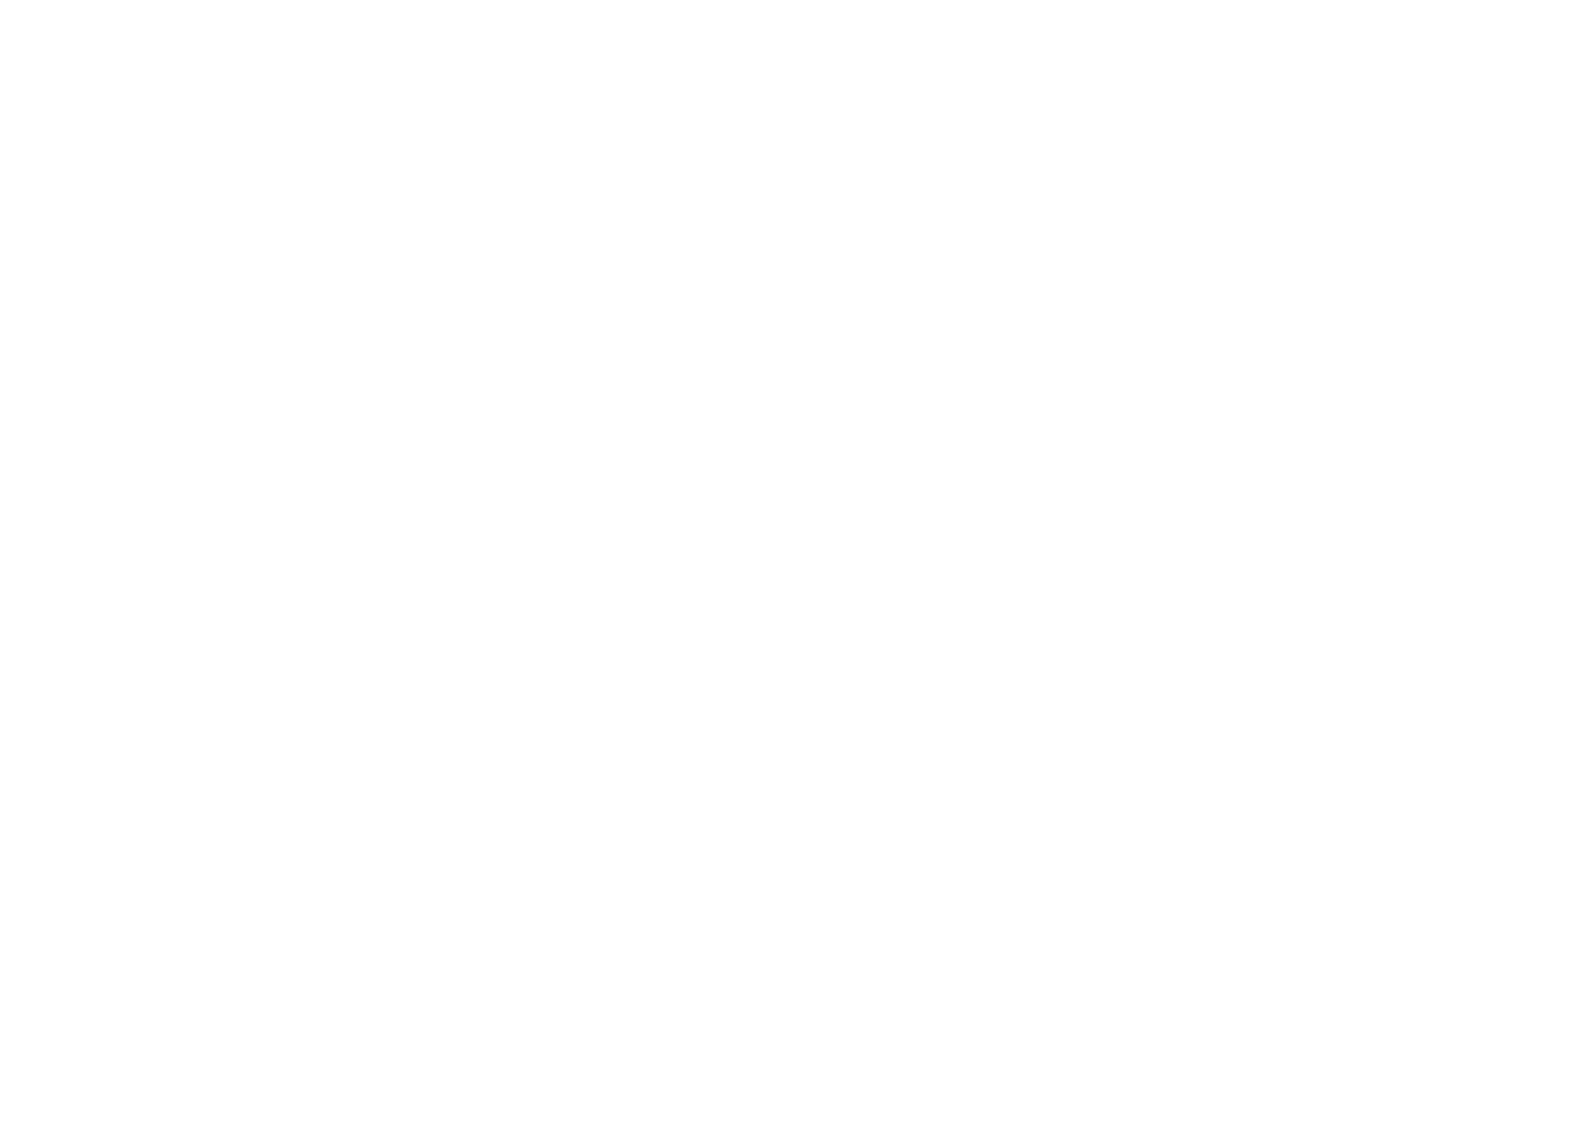 Seatrium logo for dark backgrounds (transparent PNG)